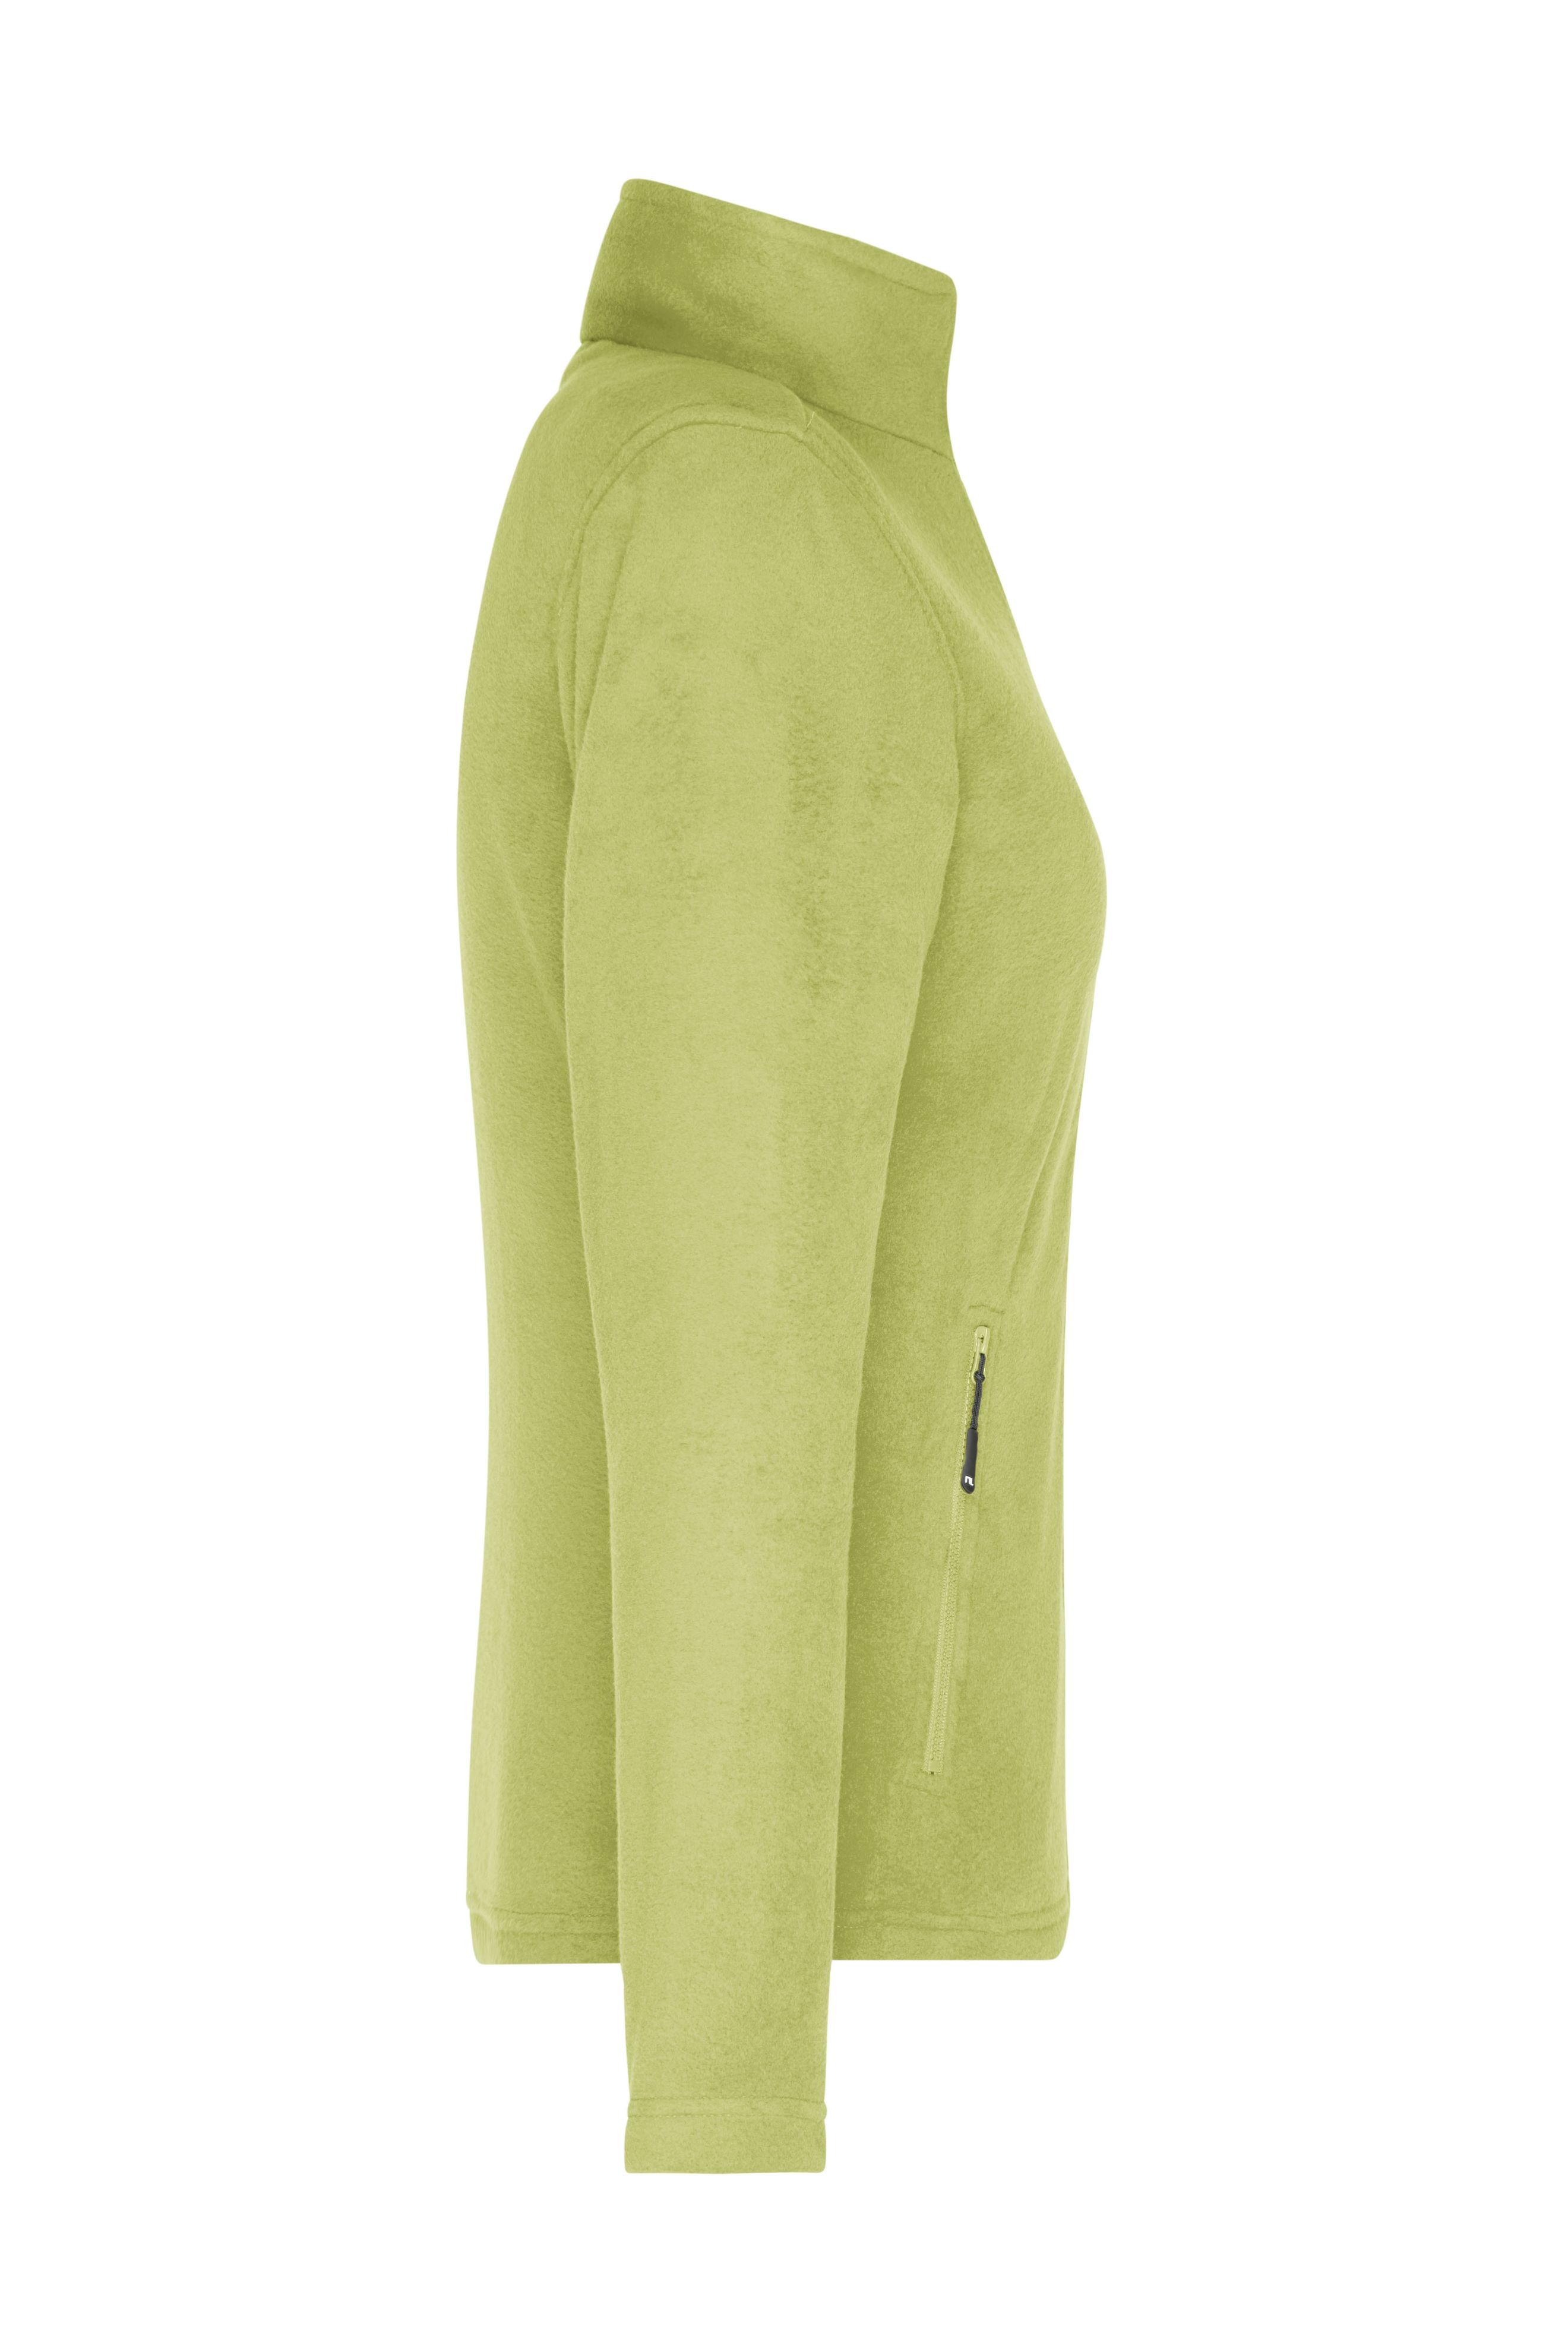 Ladies Ladies' Fleece Jacket Lime-green-Daiber